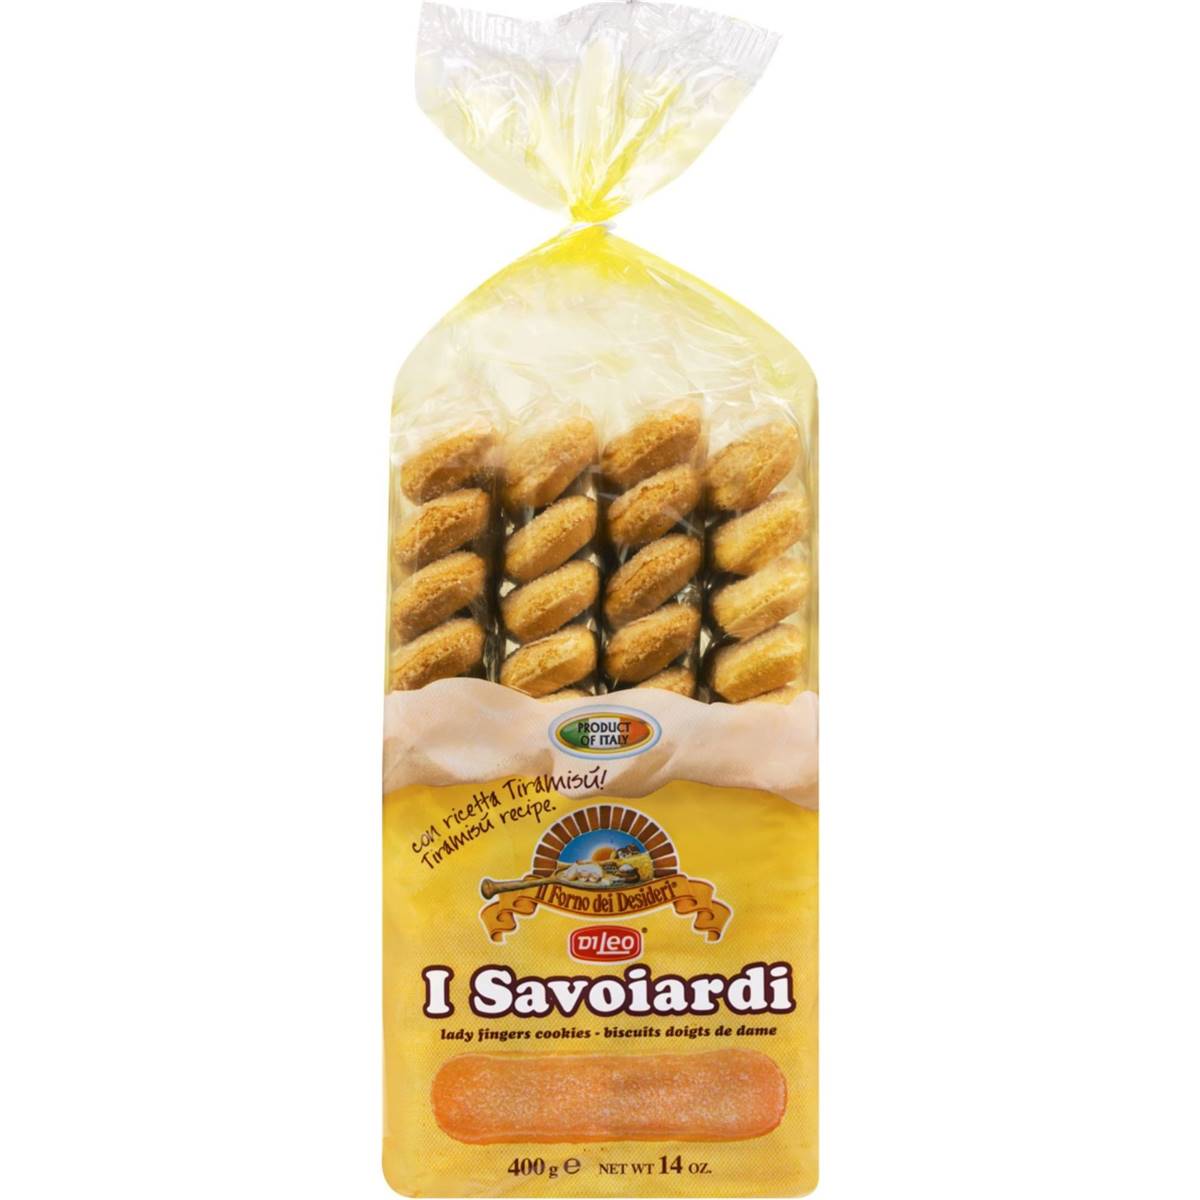 Calories in Di Leo Savoirdi Sponge Fingers Sponge Fingers